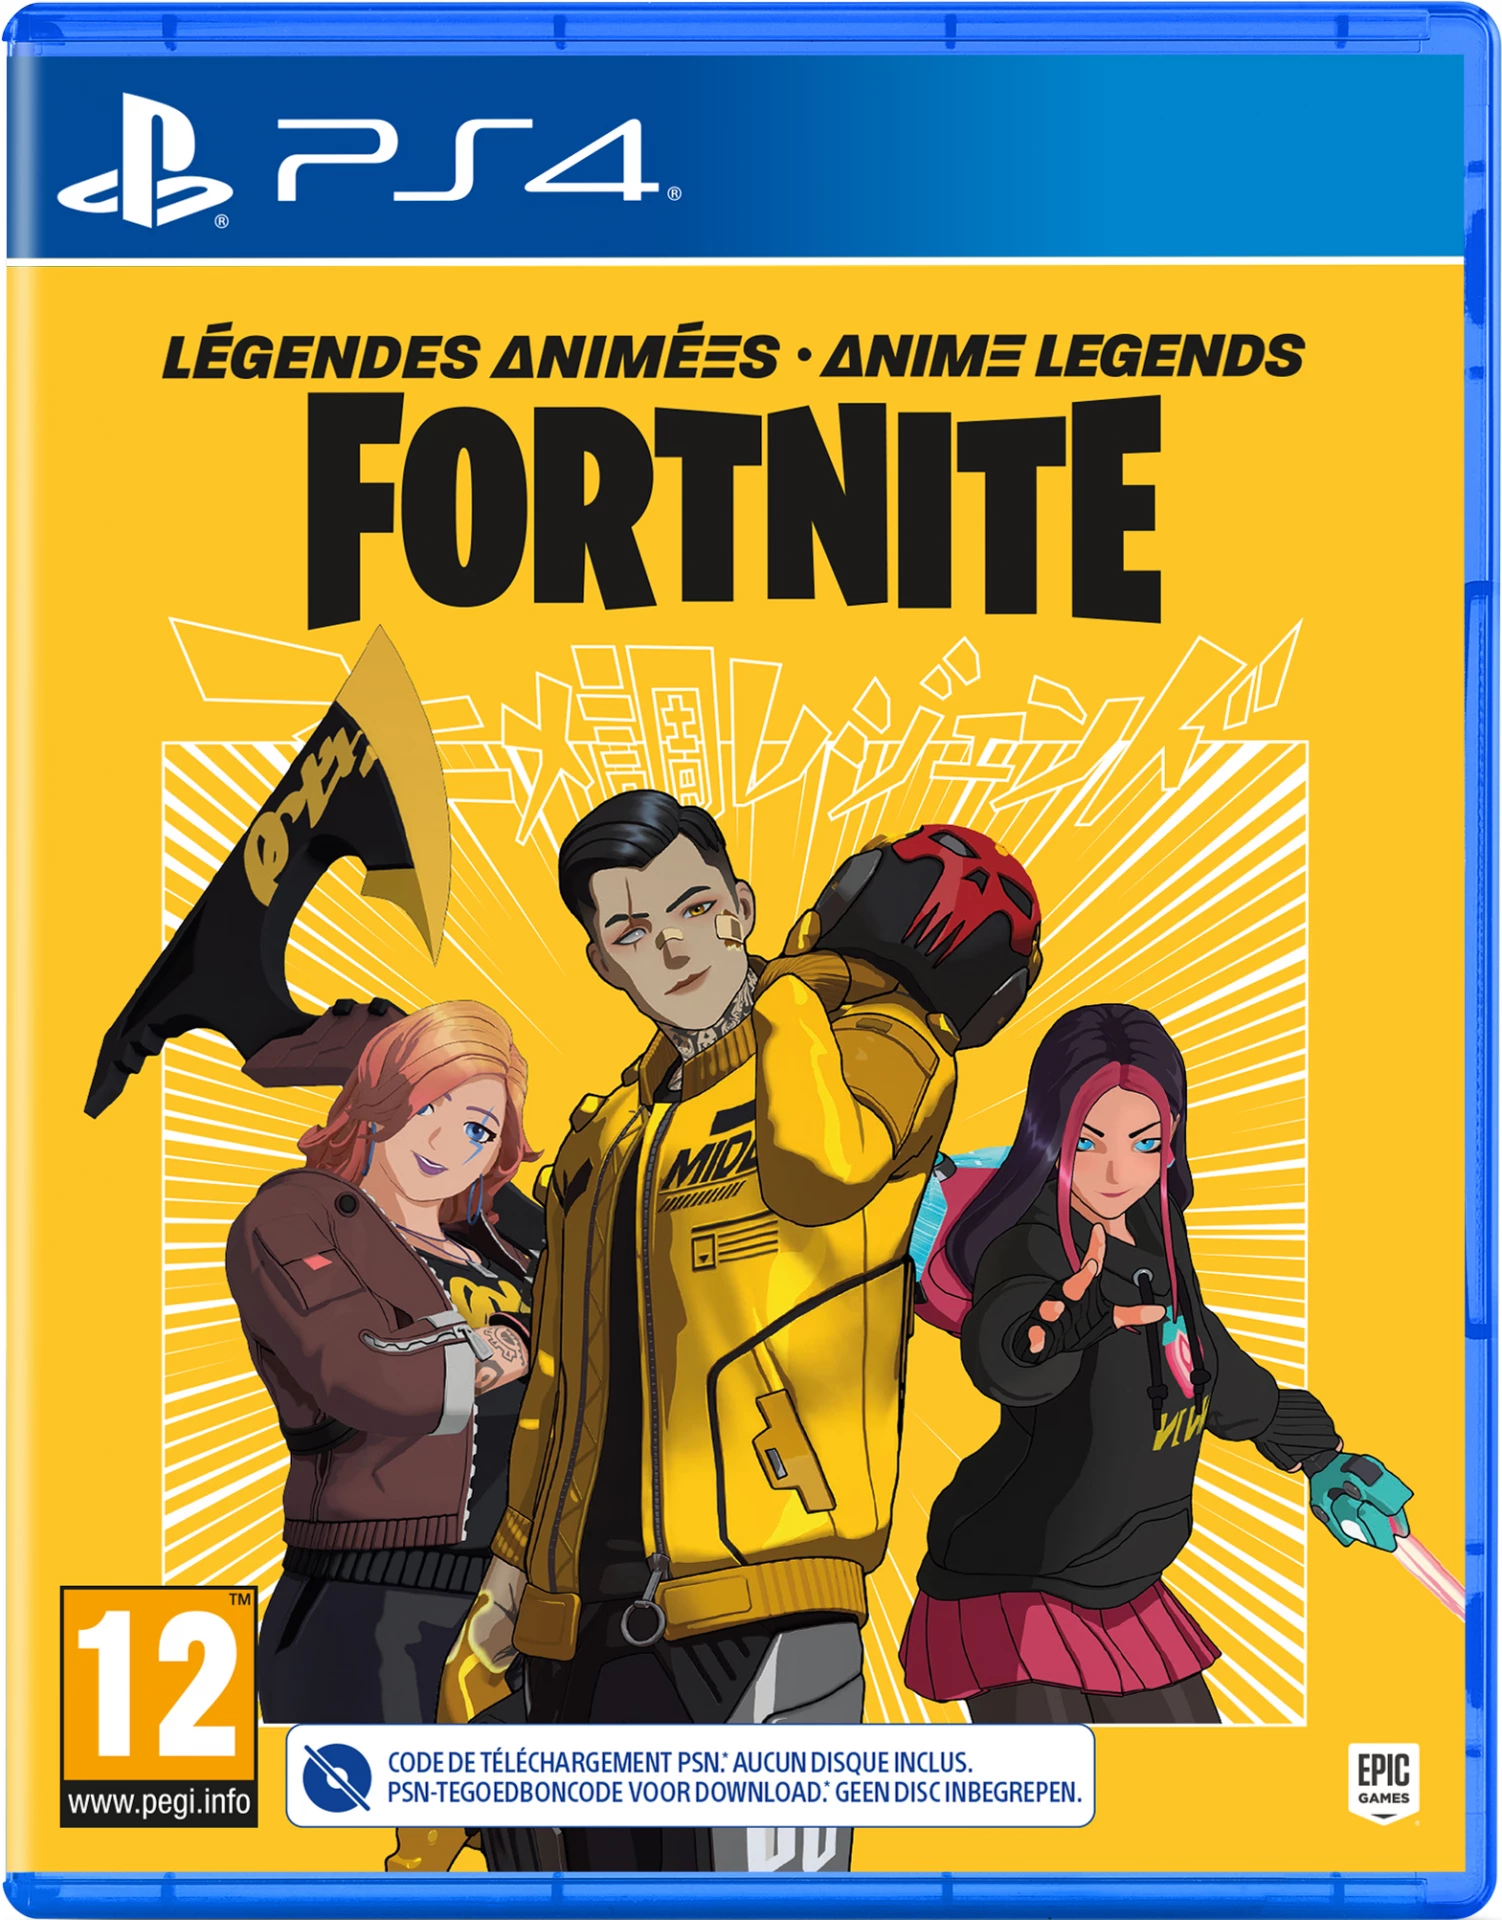 Fortnite: Anime Legends (PS4), Epic Games